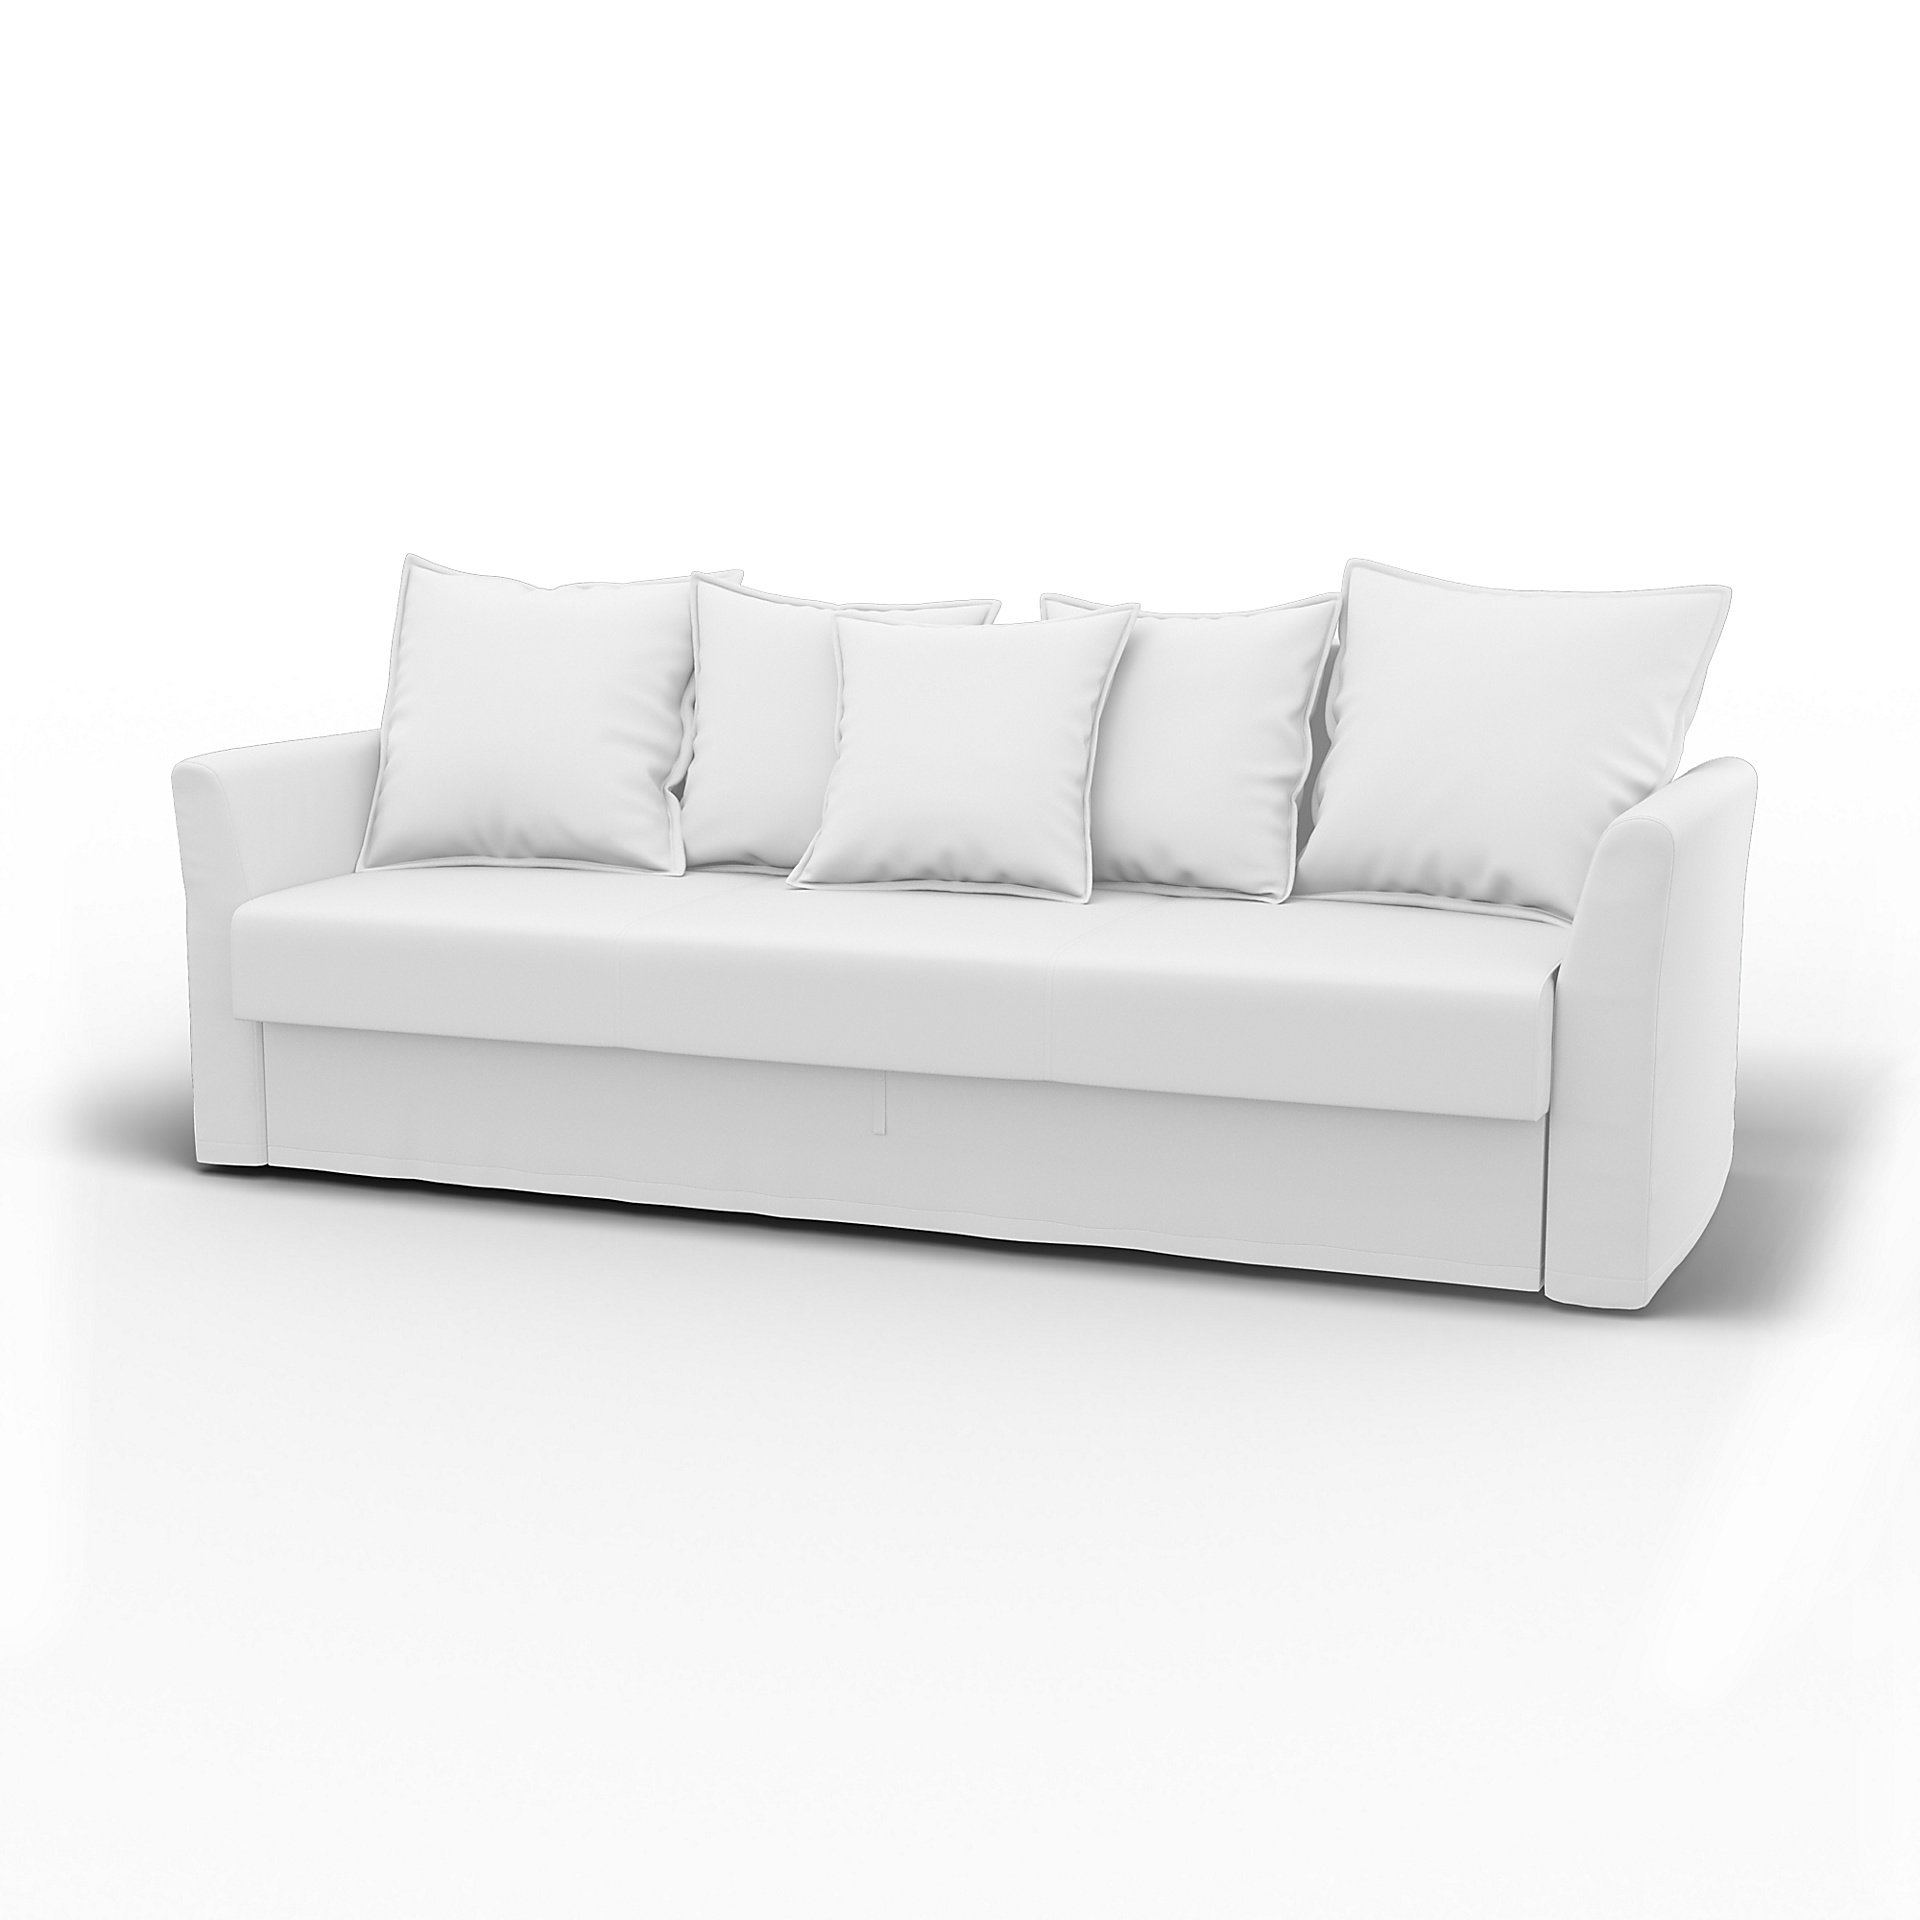 IKEA - Holmsund Sofabed, Absolute White, Linen - Bemz